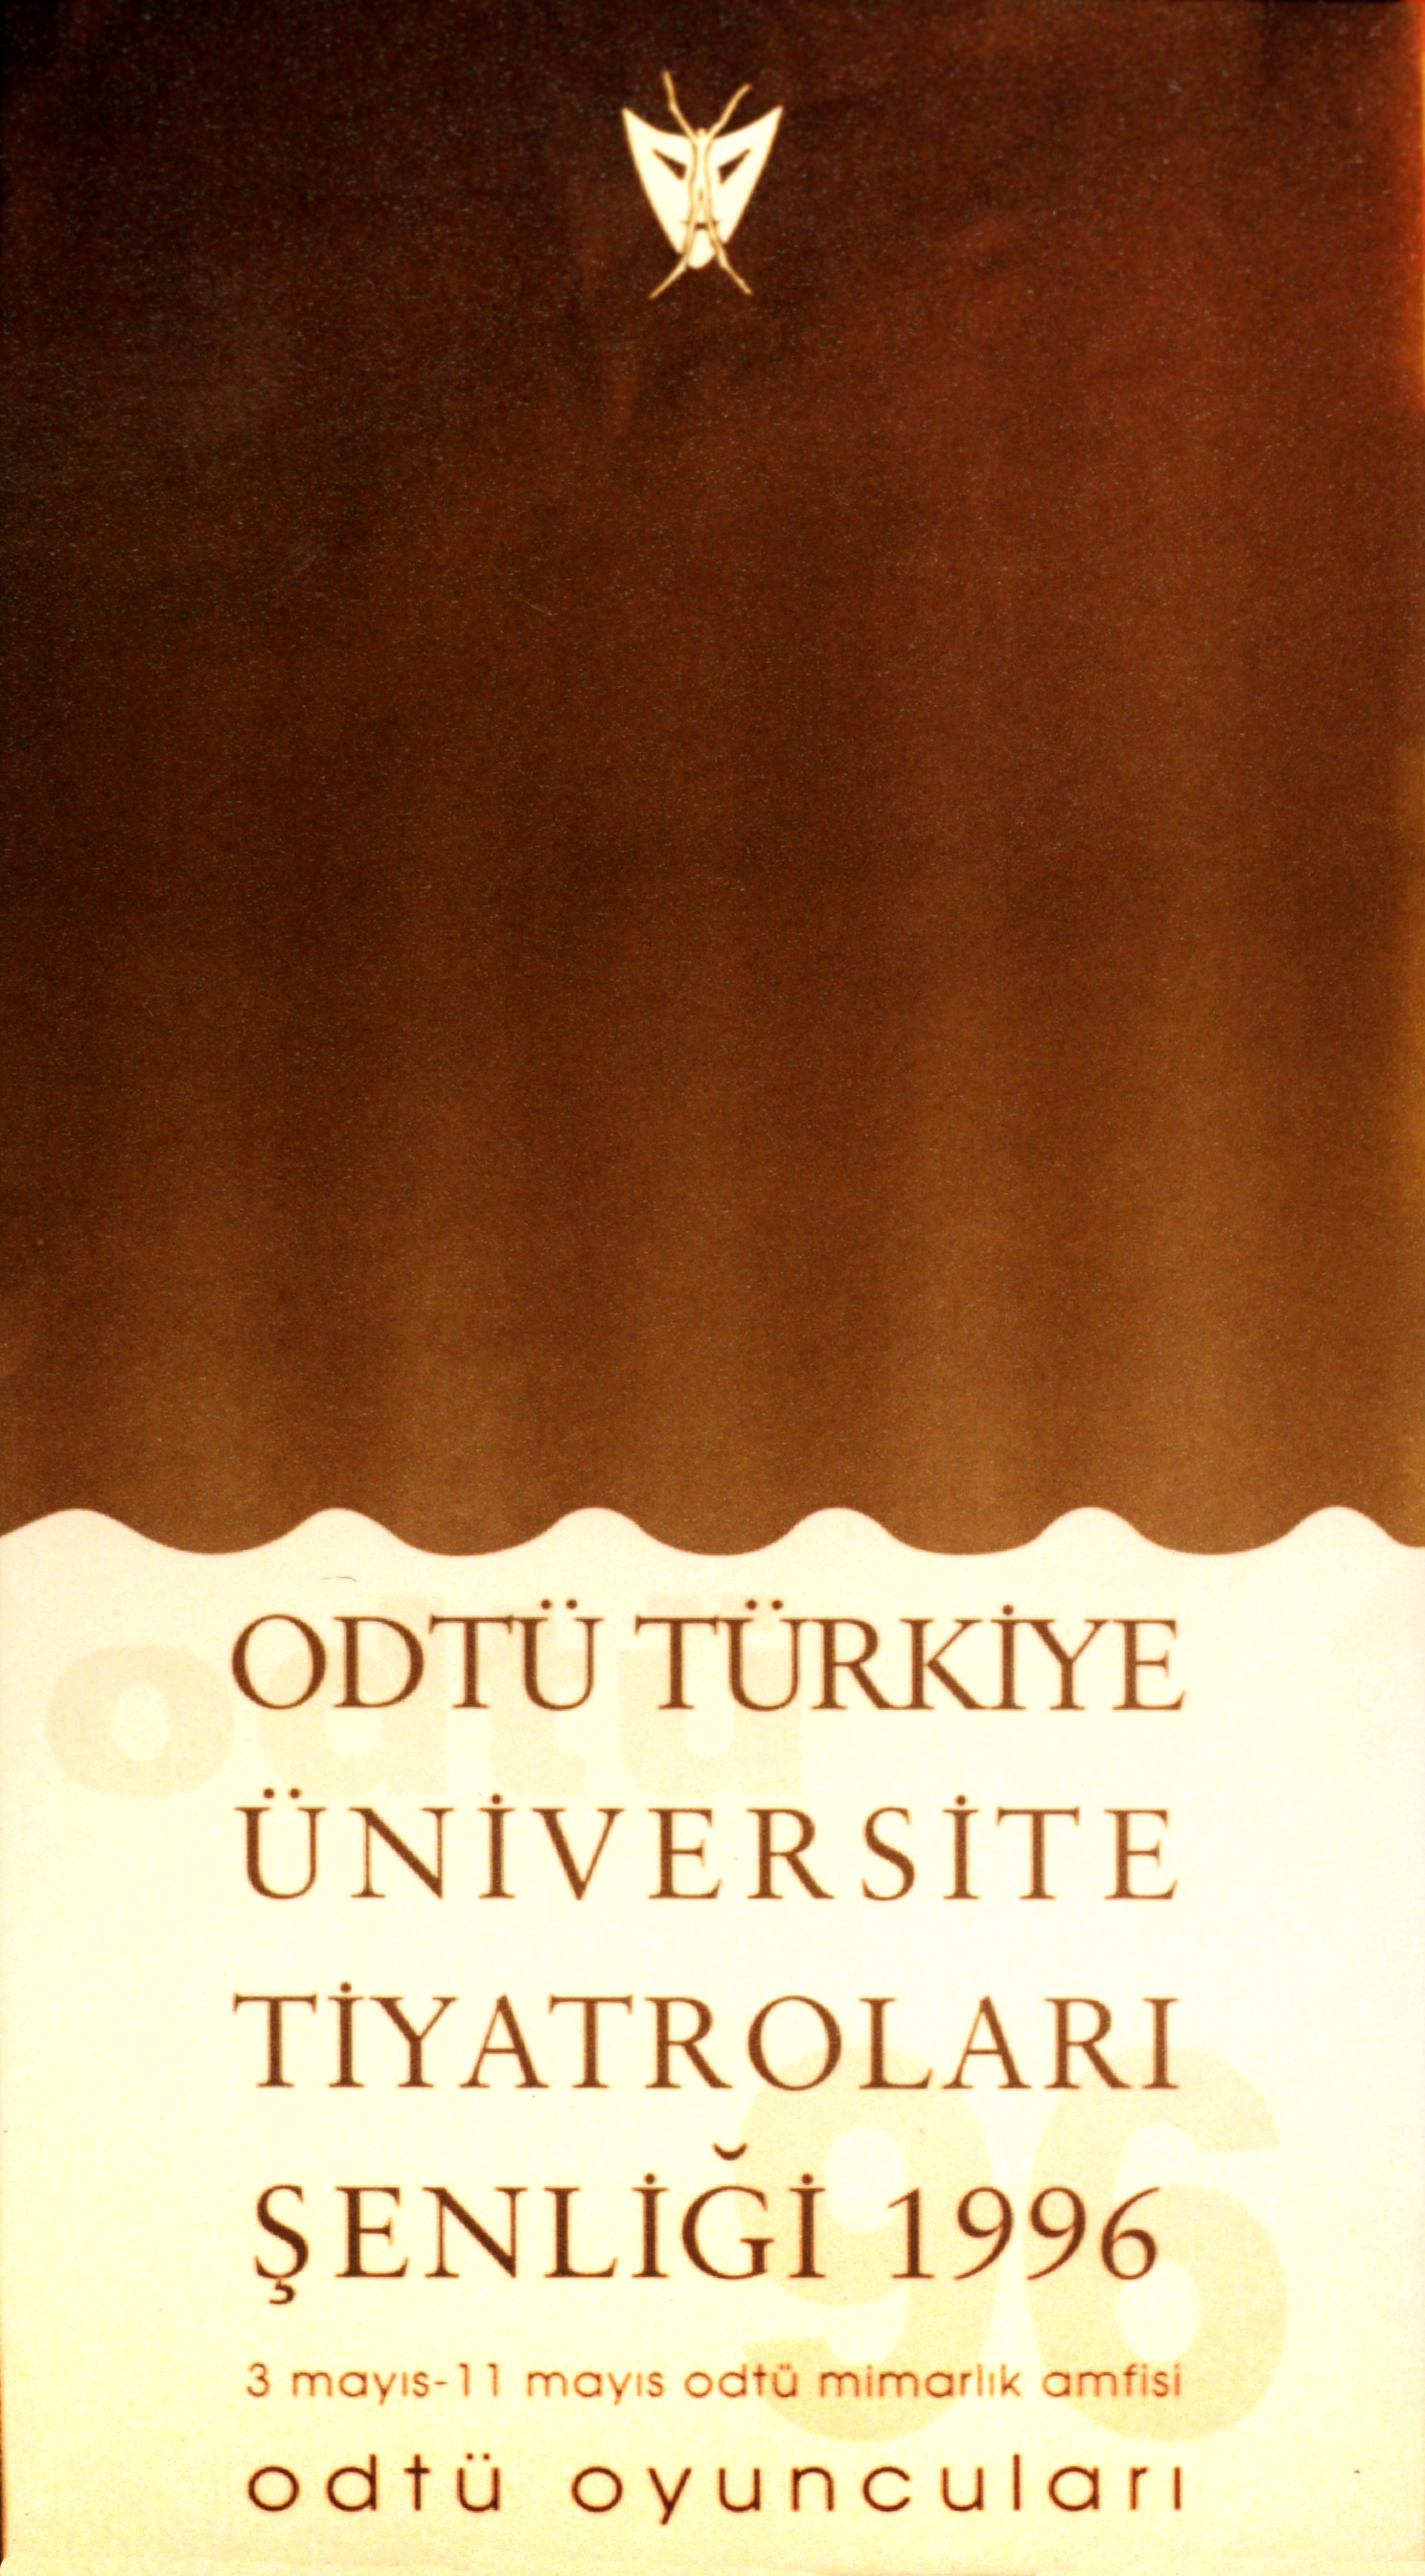 "Festival 96" METU university theater festival poster and brochure (1996)